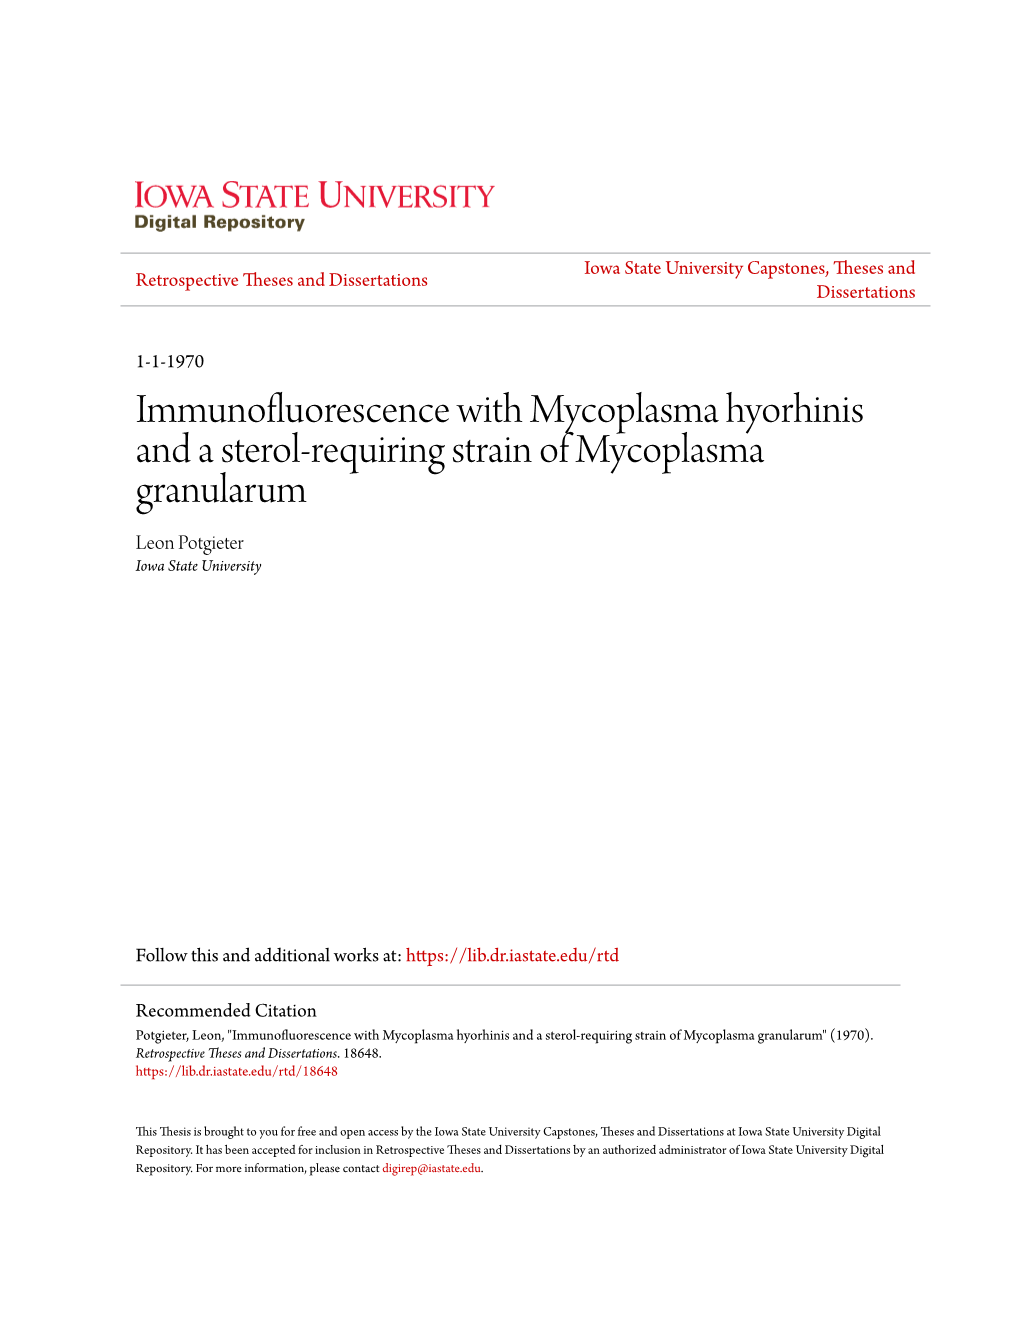 Immunofluorescence with Mycoplasma Hyorhinis and a Sterol-Requiring Strain of Mycoplasma Granularum Leon Potgieter Iowa State University